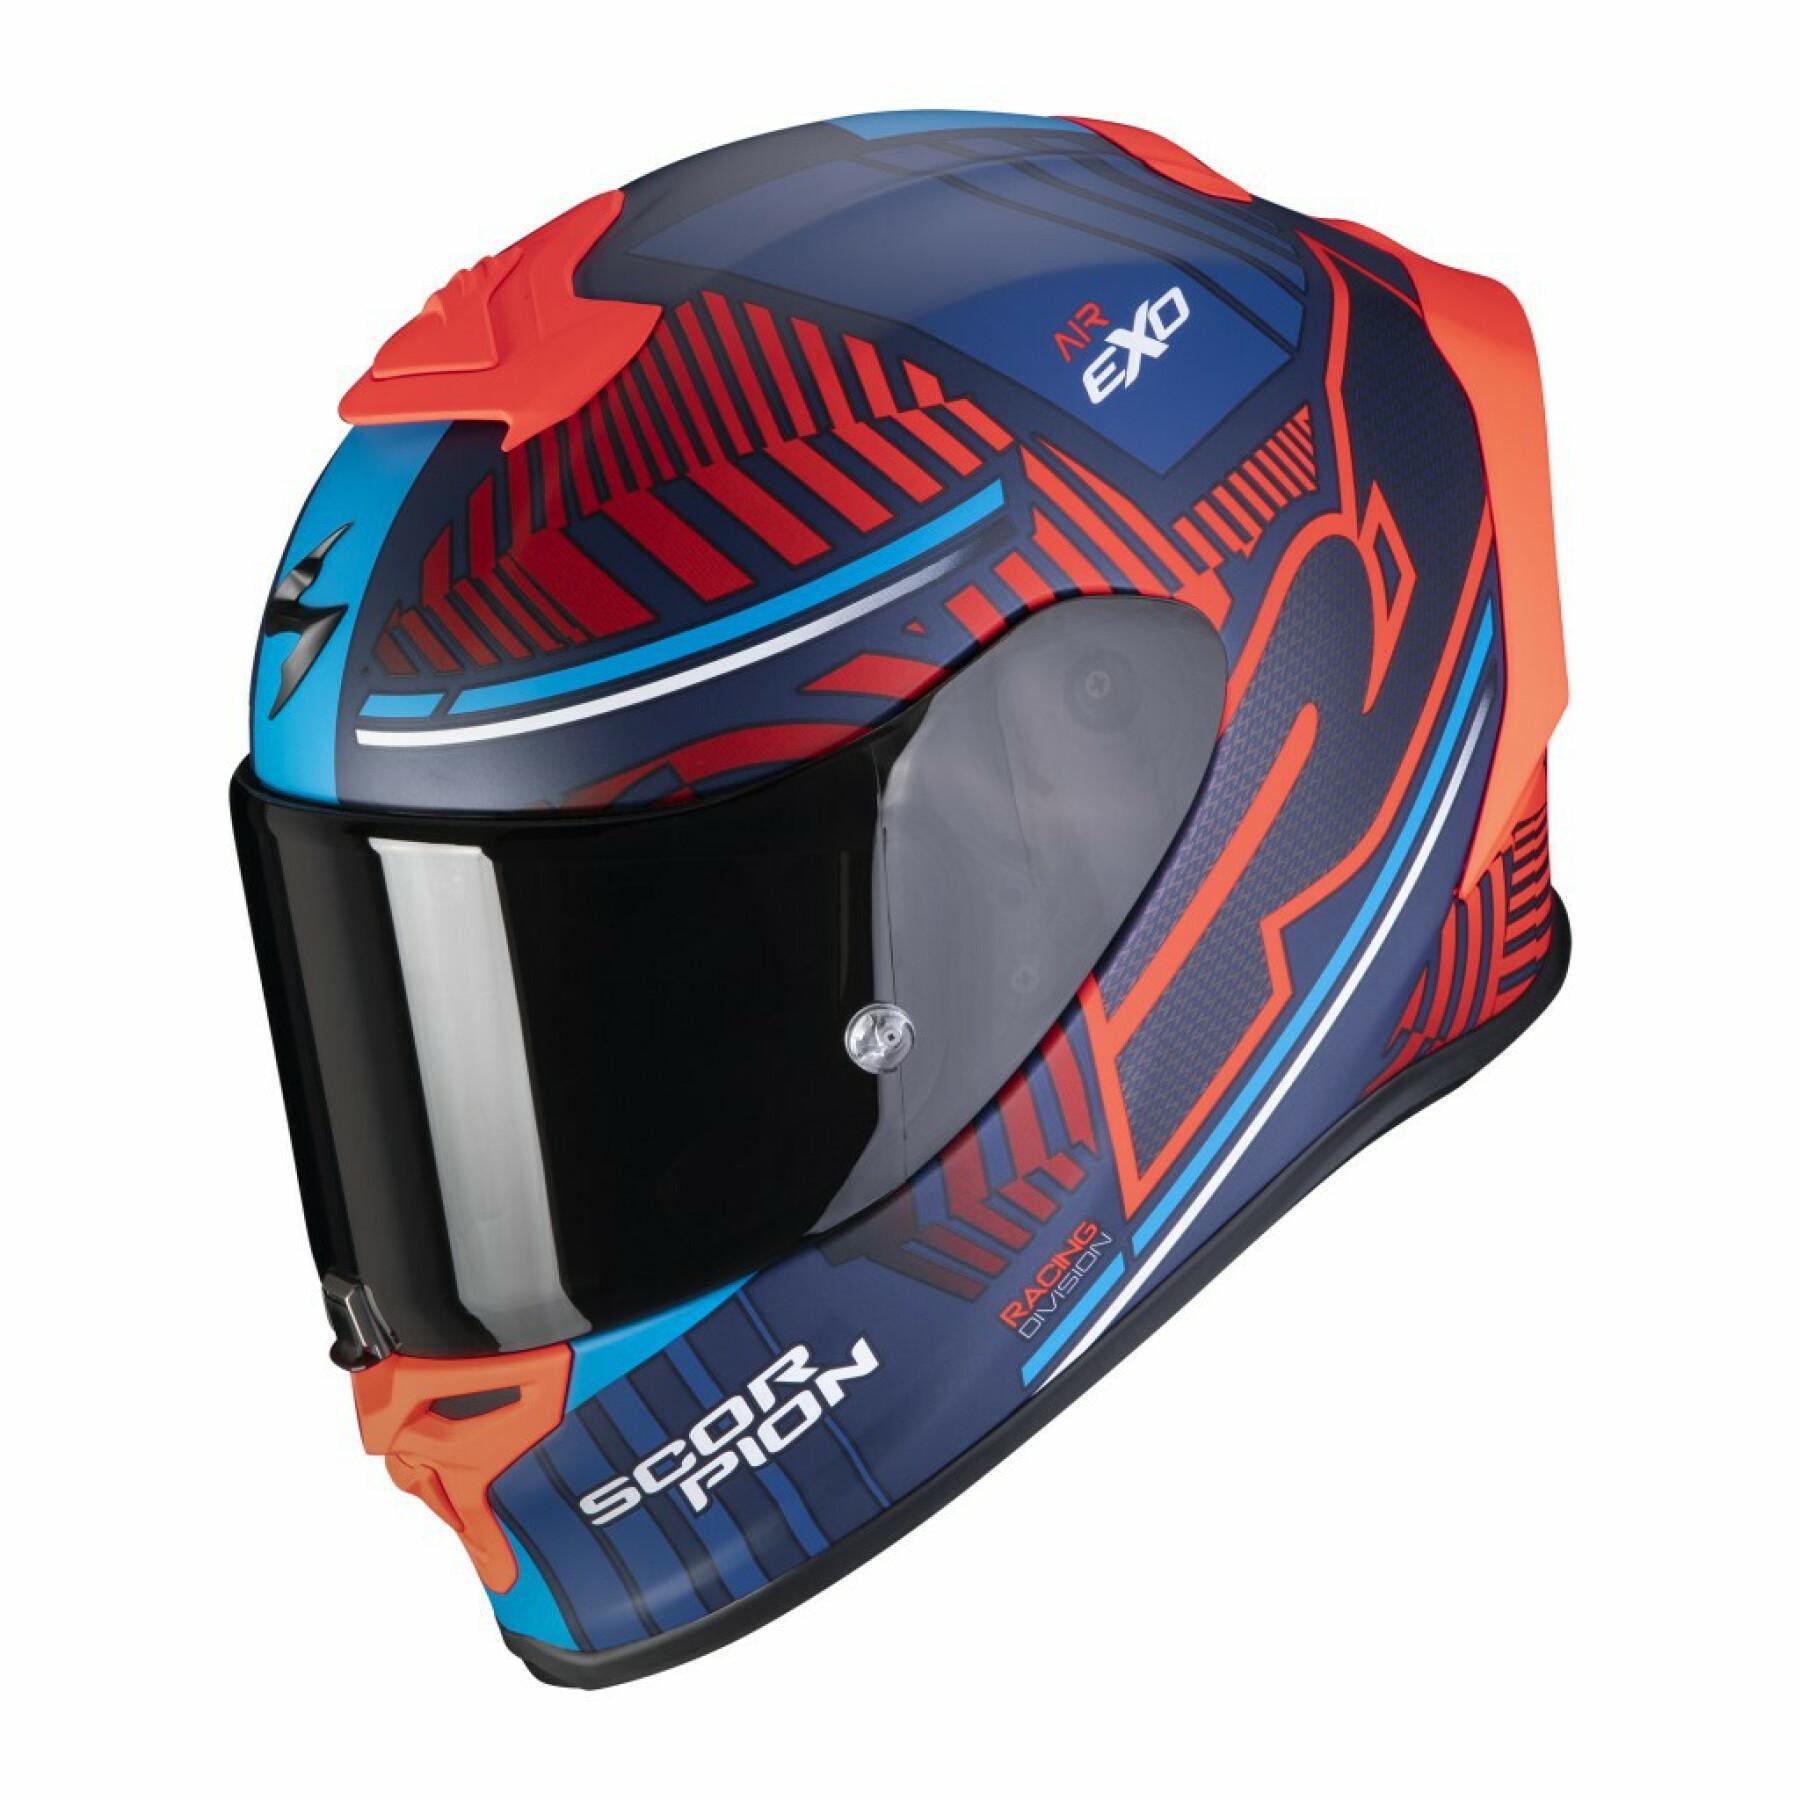 Full face helmet Scorpion Exo-R1 Air VICTORY